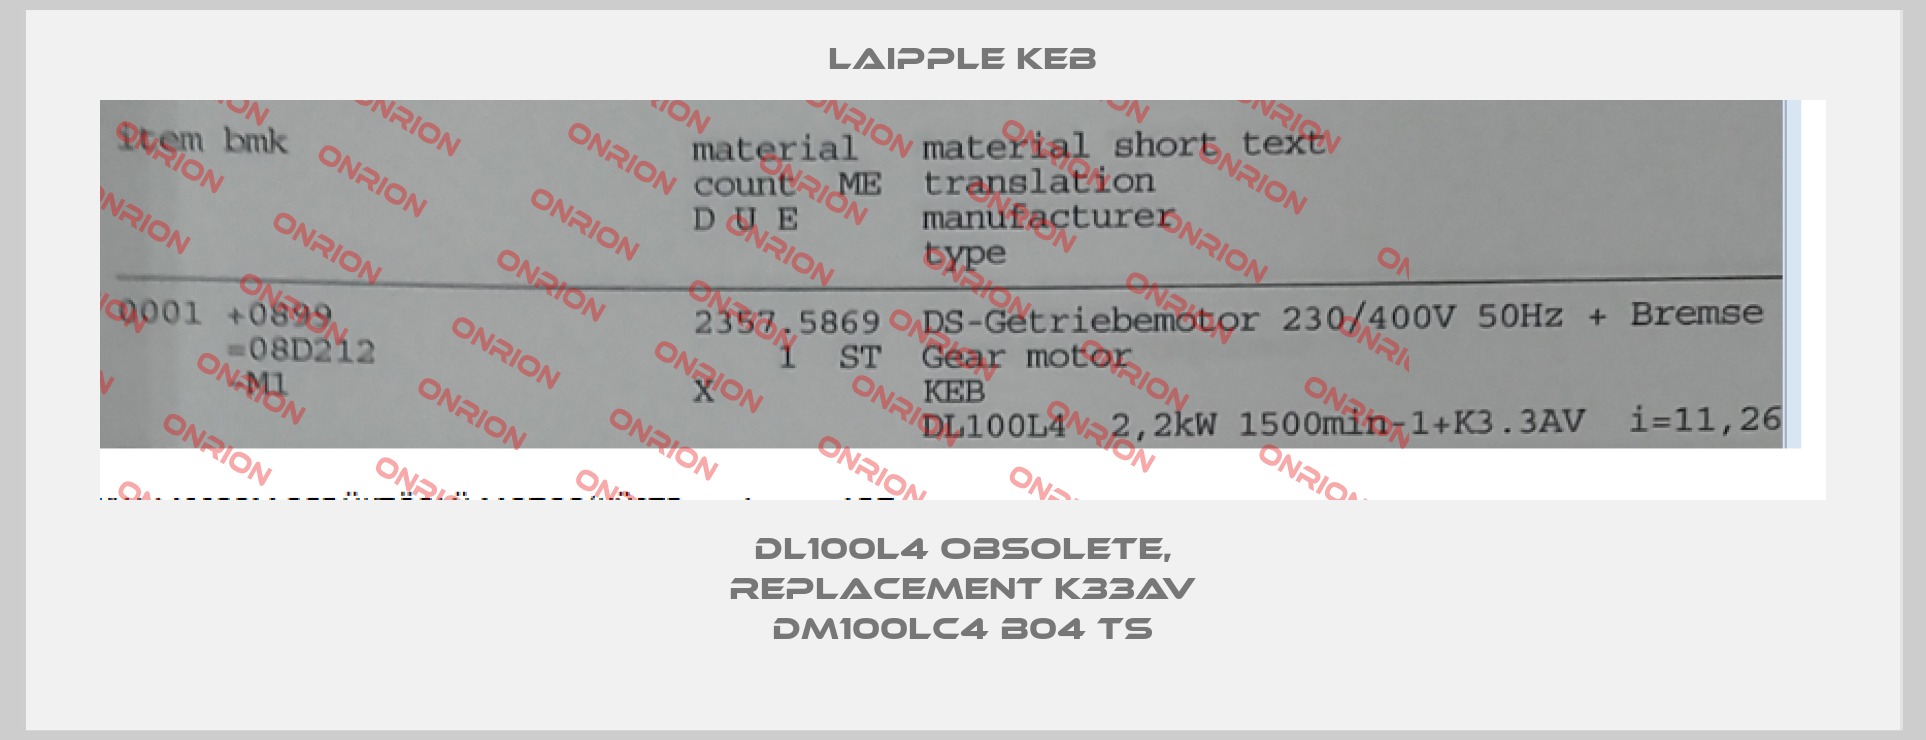 DL100L4 obsolete, replacement K33AV DM100LC4 B04 TS-big